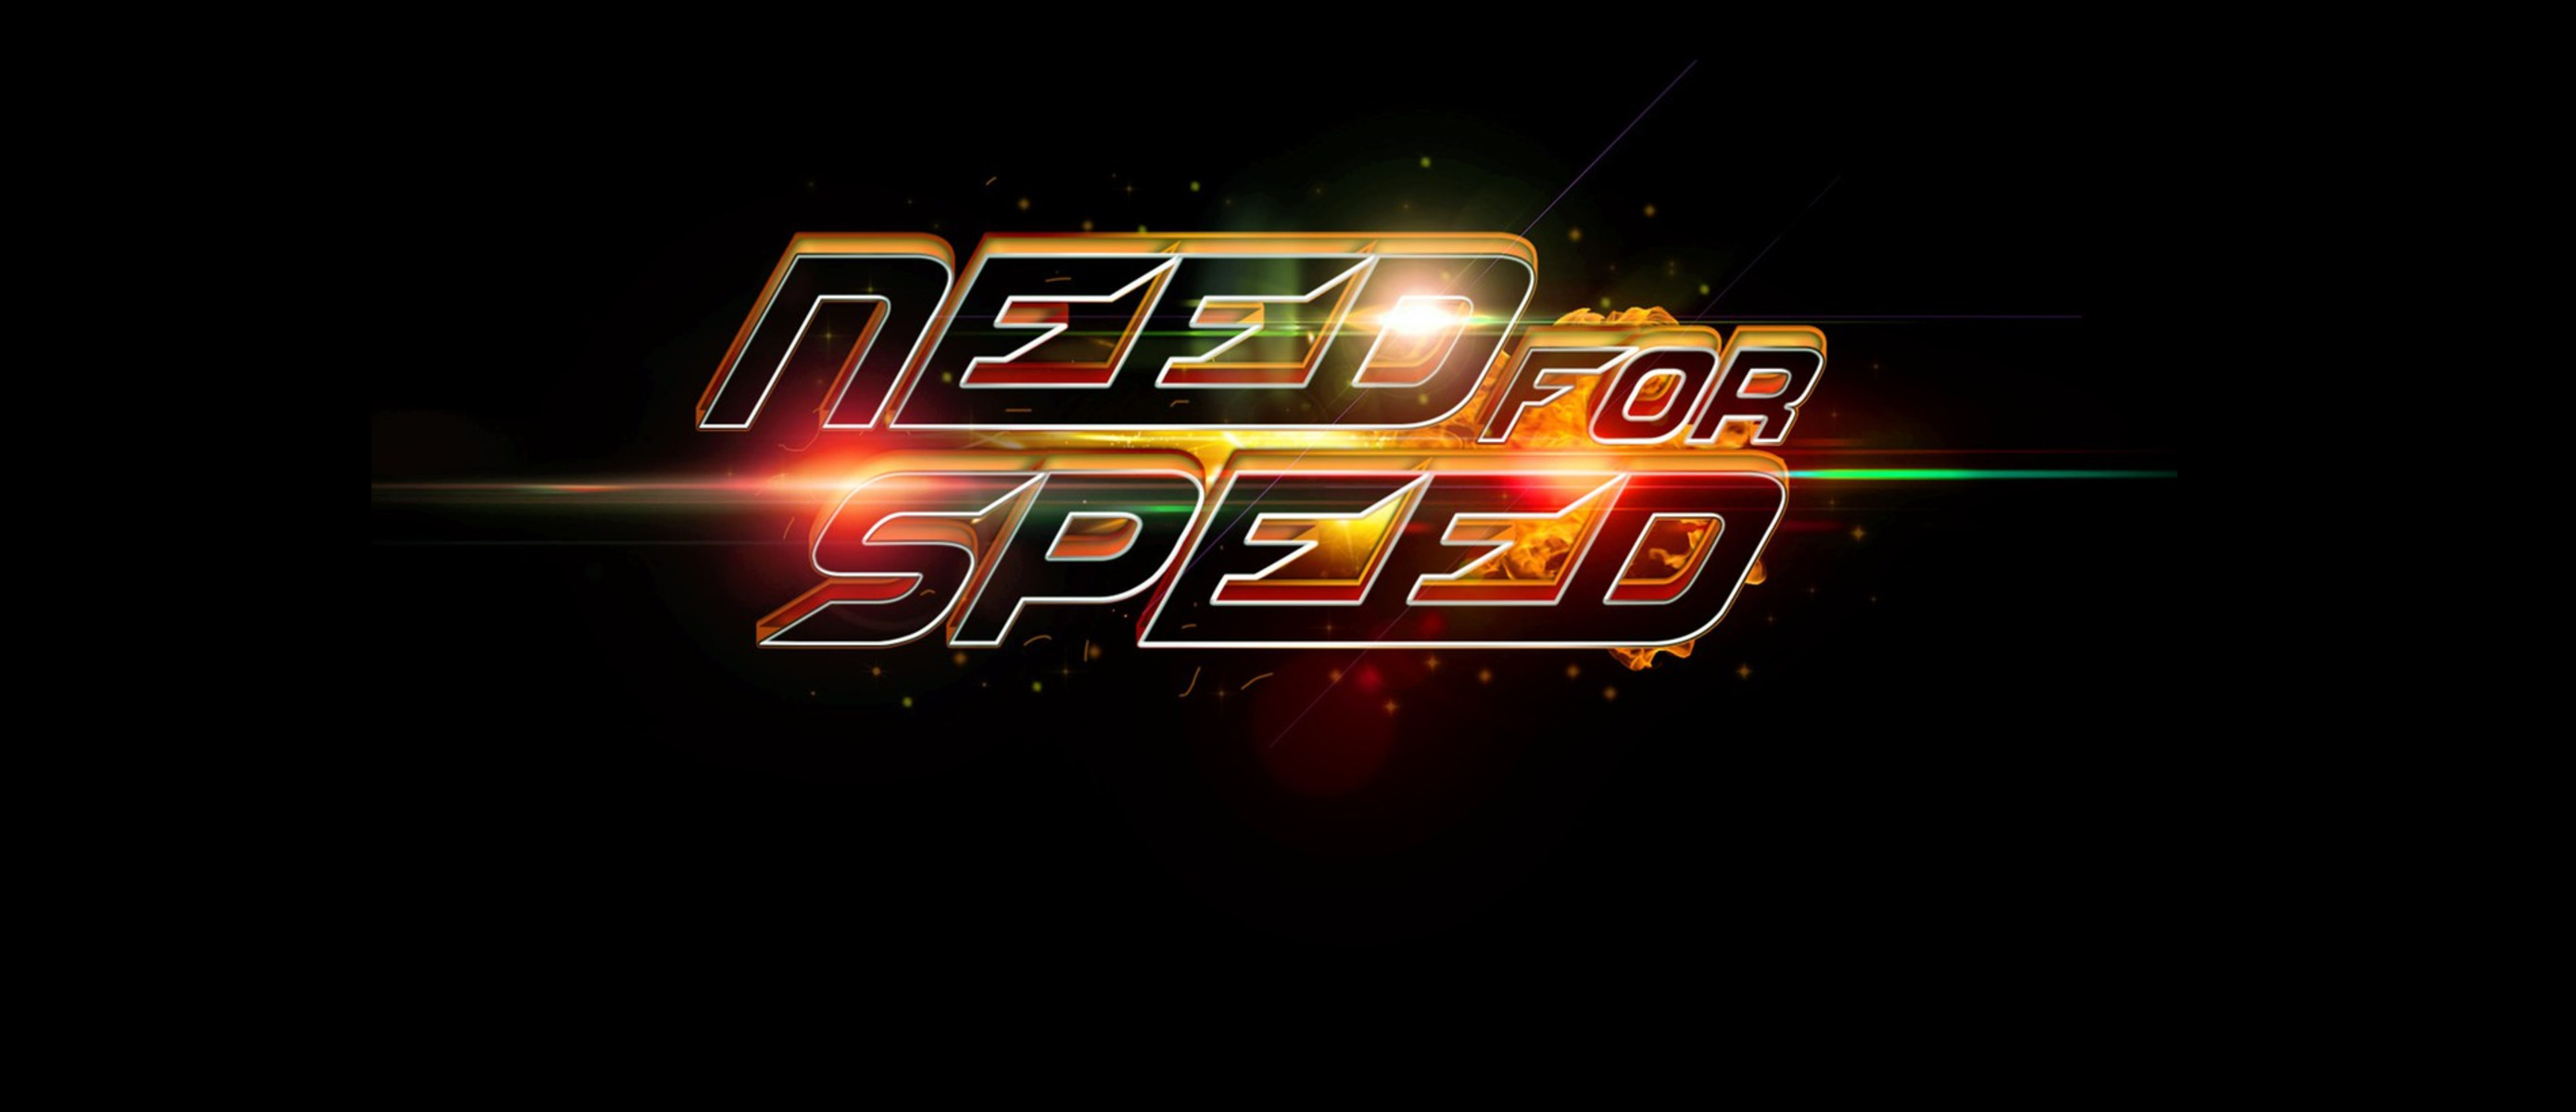 Need logo. Значок NFS. Need for Speed лого. Need for Speed надпись. Гонки логотип.